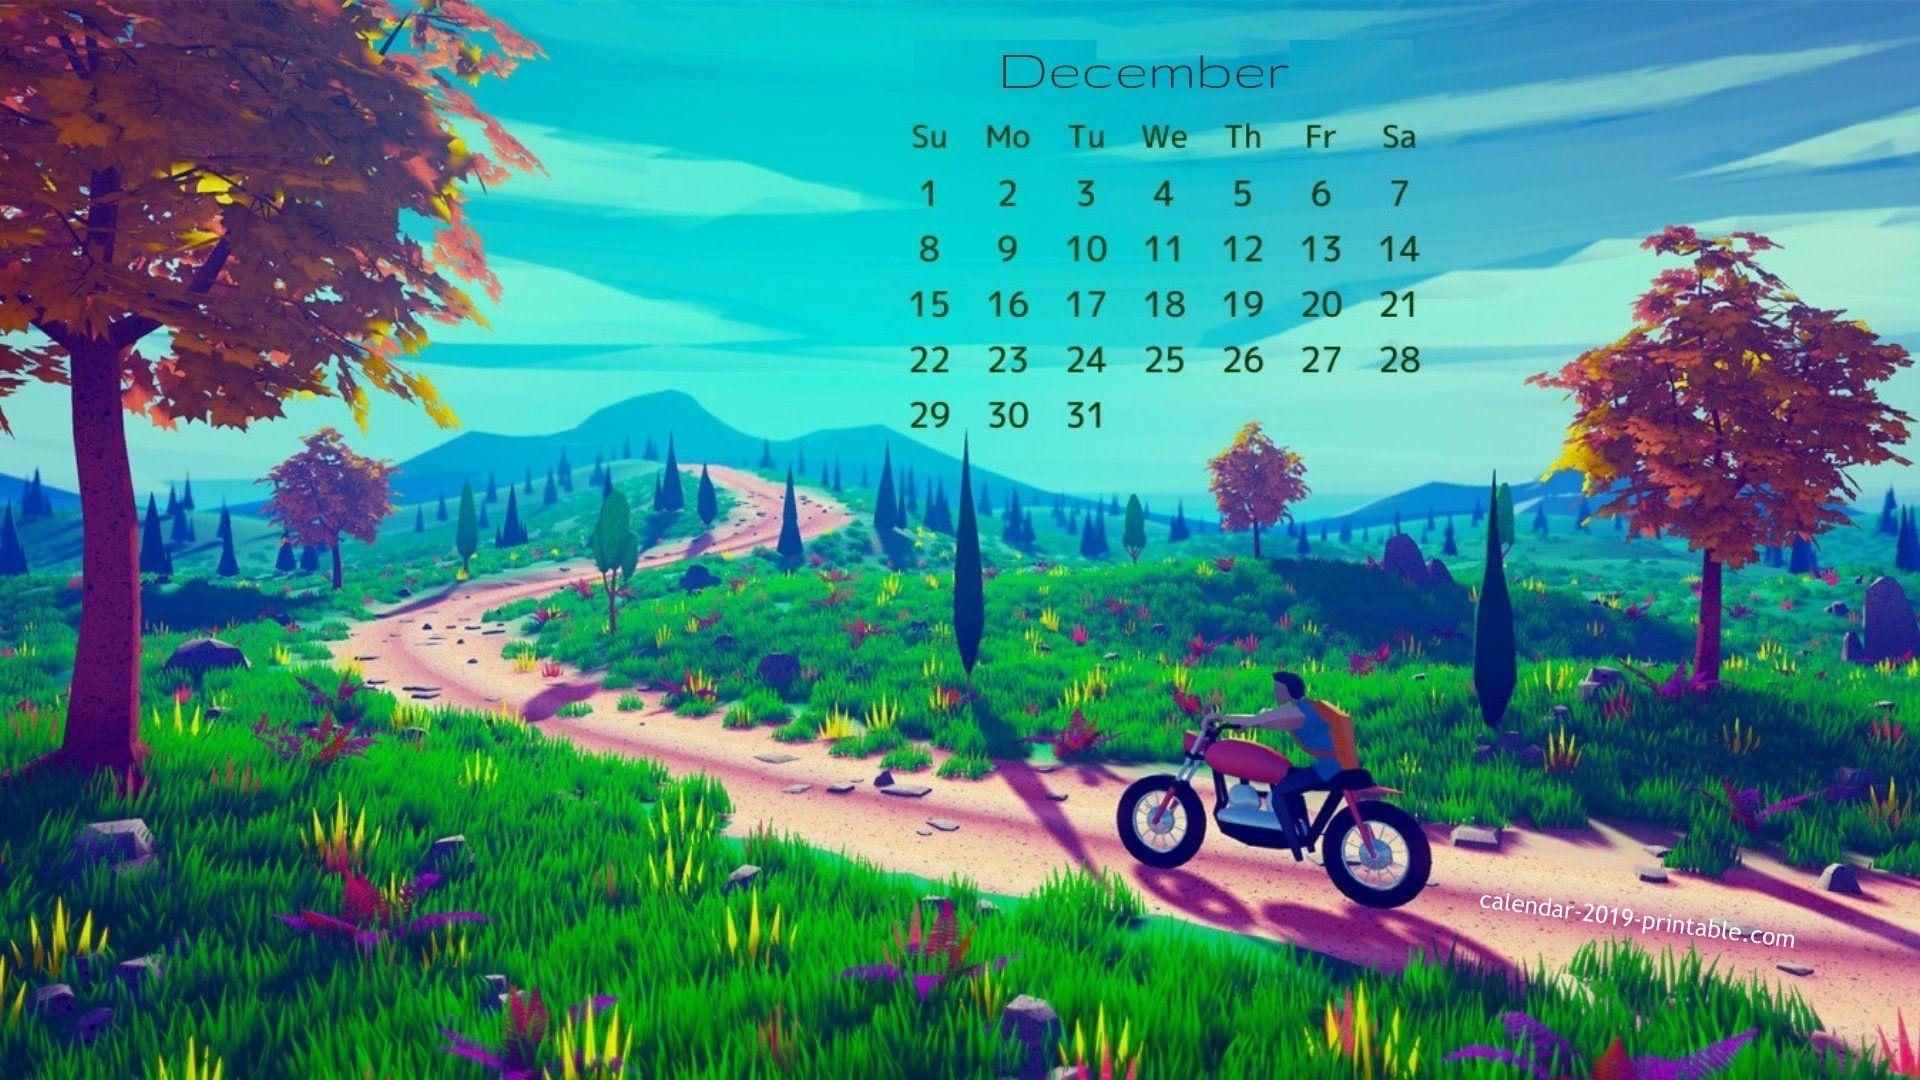 December 2019 Calendar Desktop Wallpaper. Calendar 2019 Printable